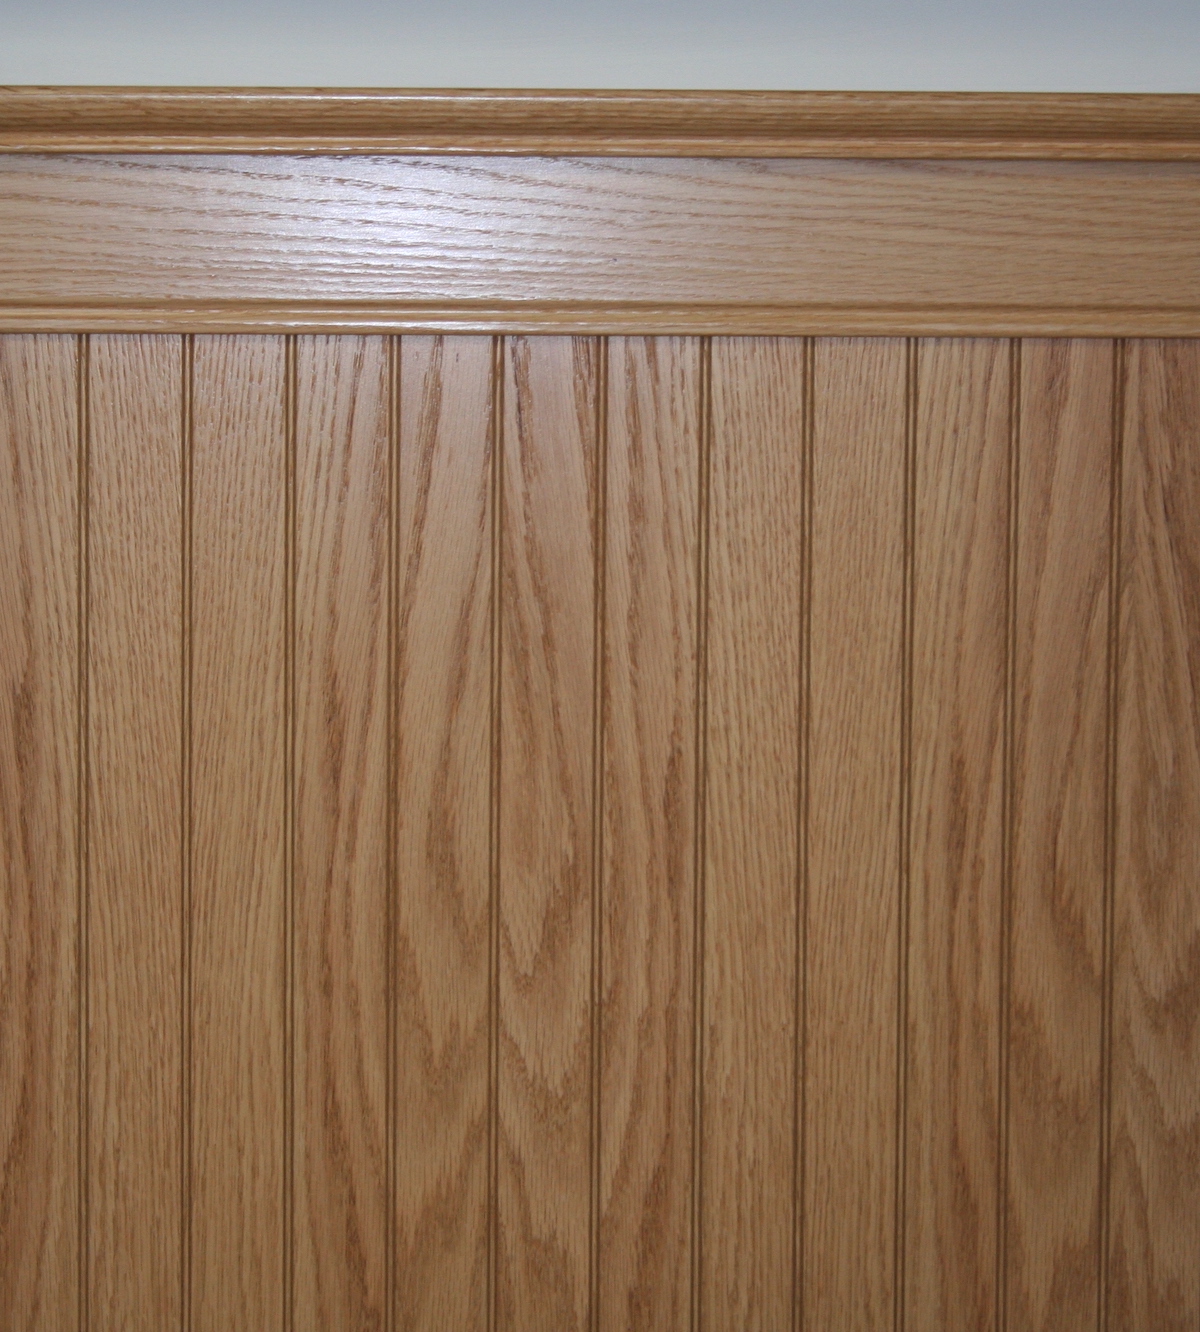 Red oak hardwood veneered beadboard for interior application